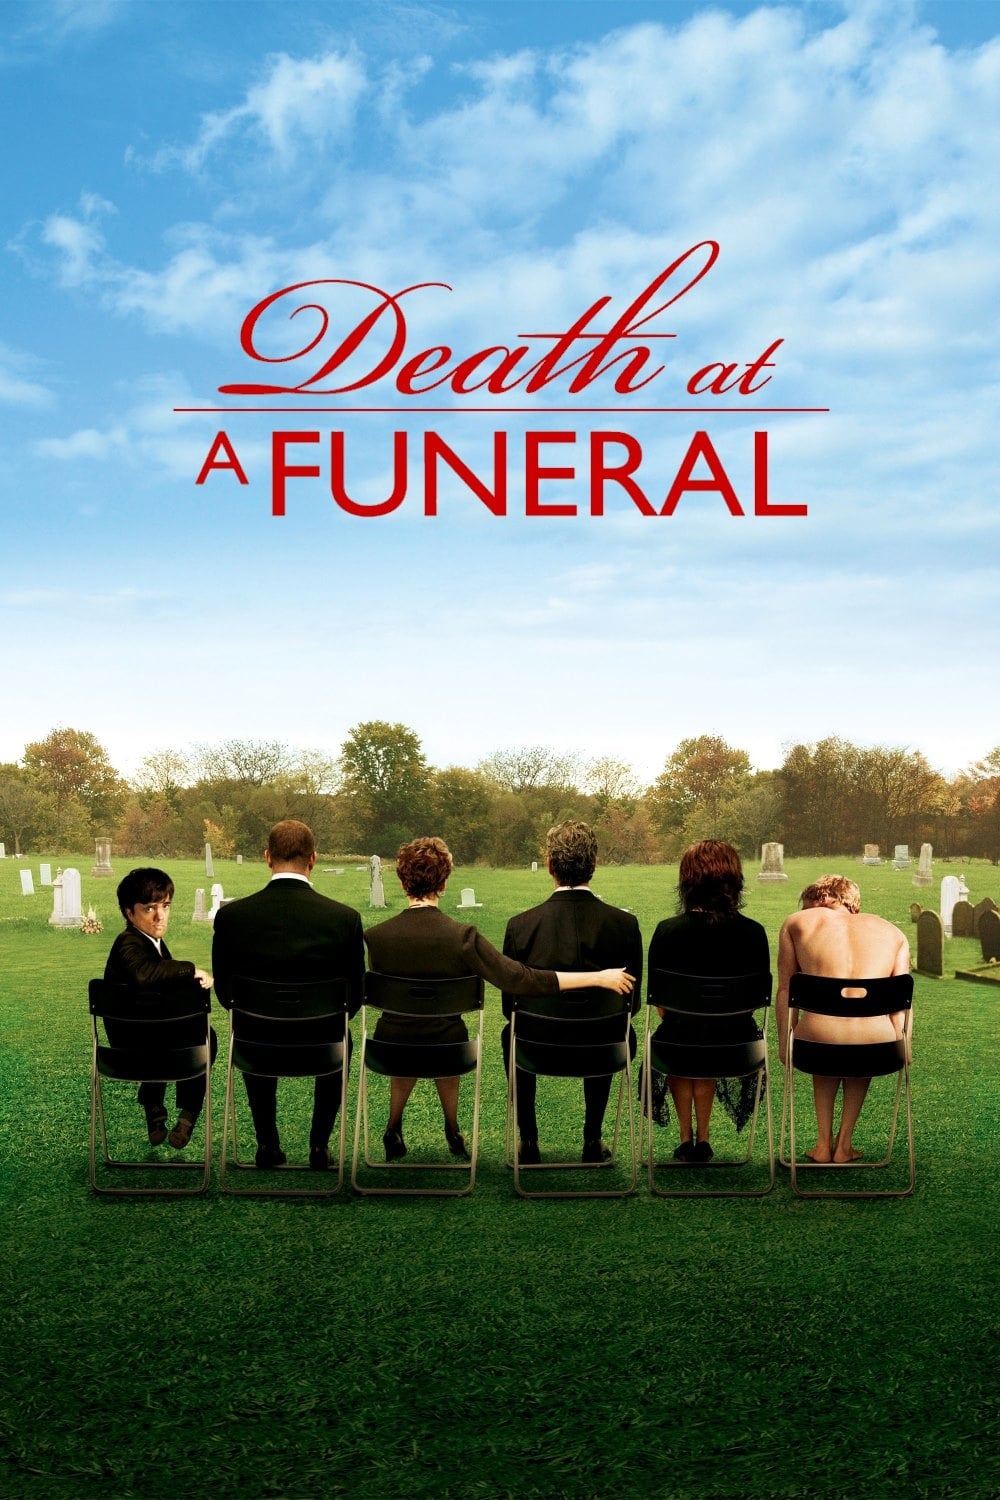 Joyeuses funérailles (2007)